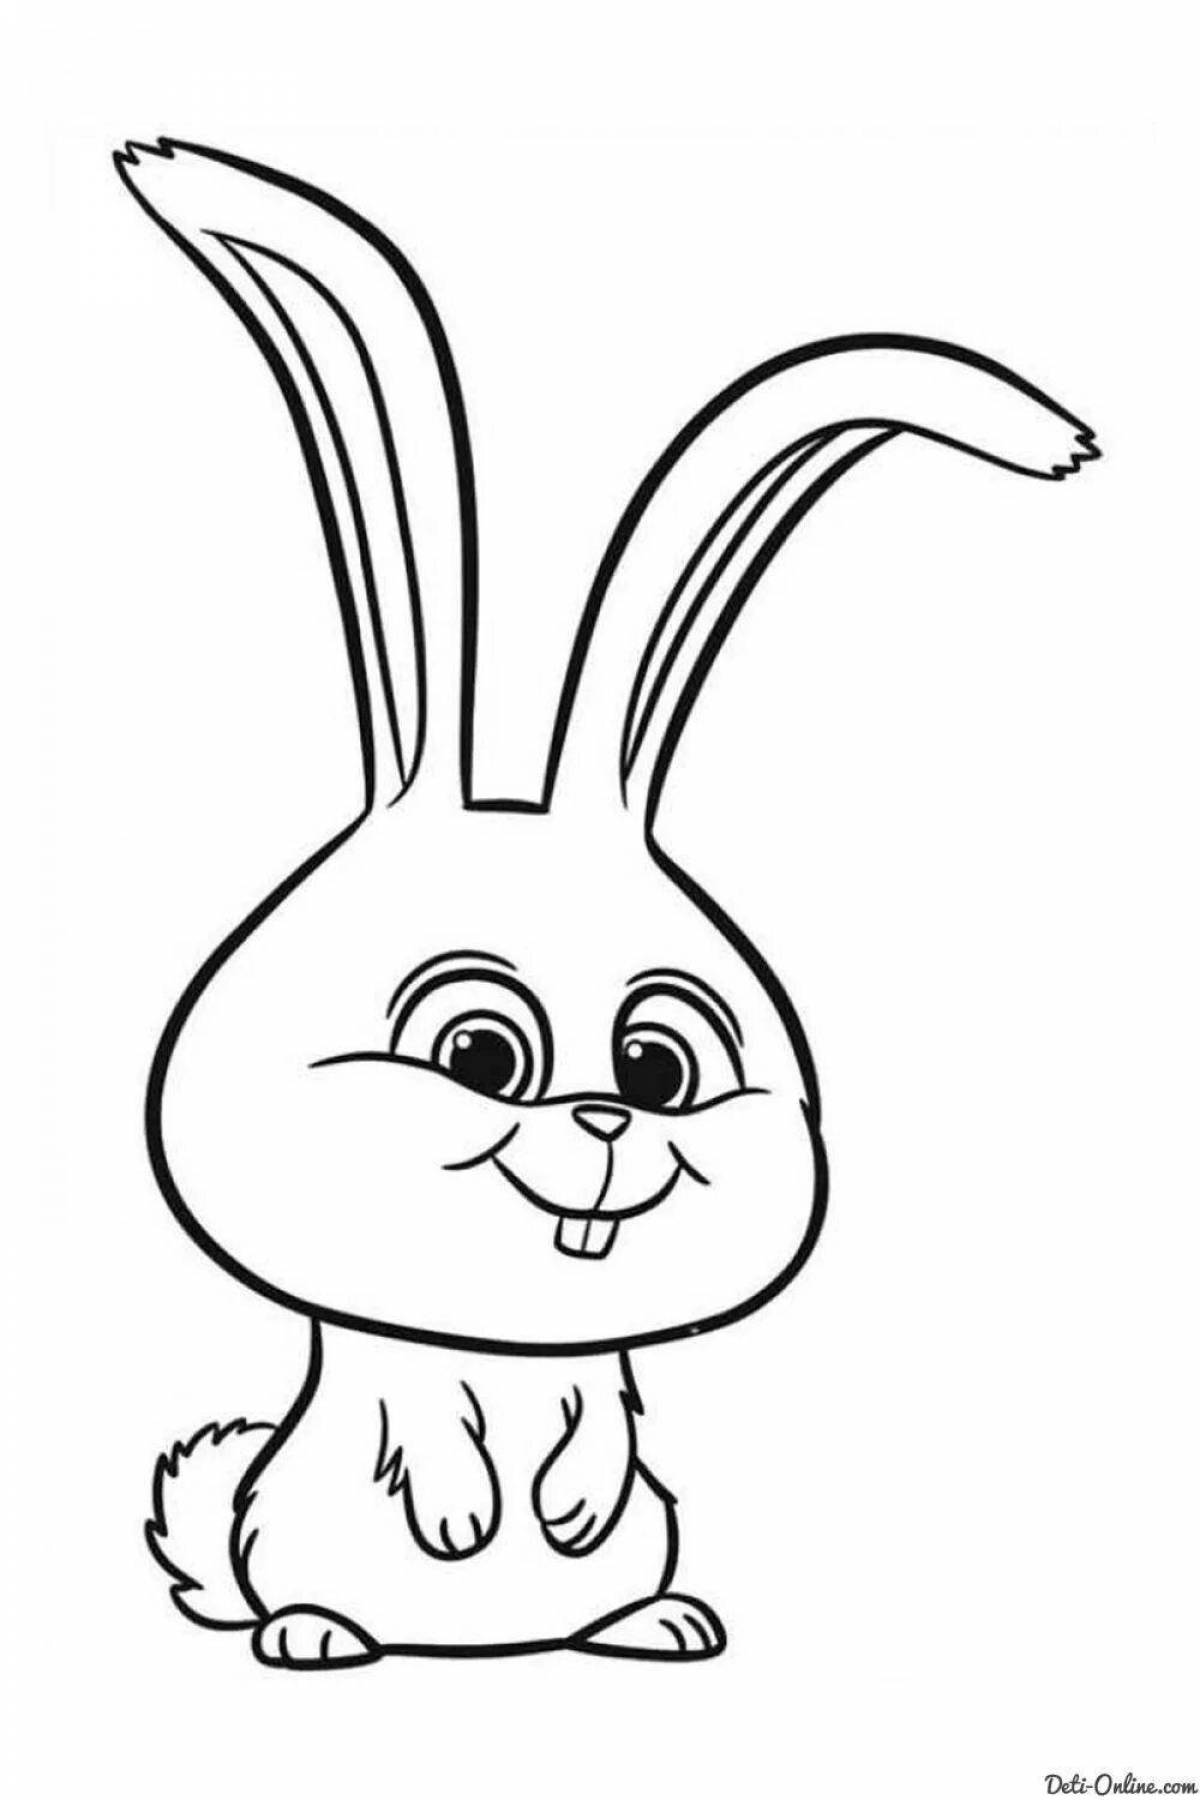 Rampant cartoon hare coloring page